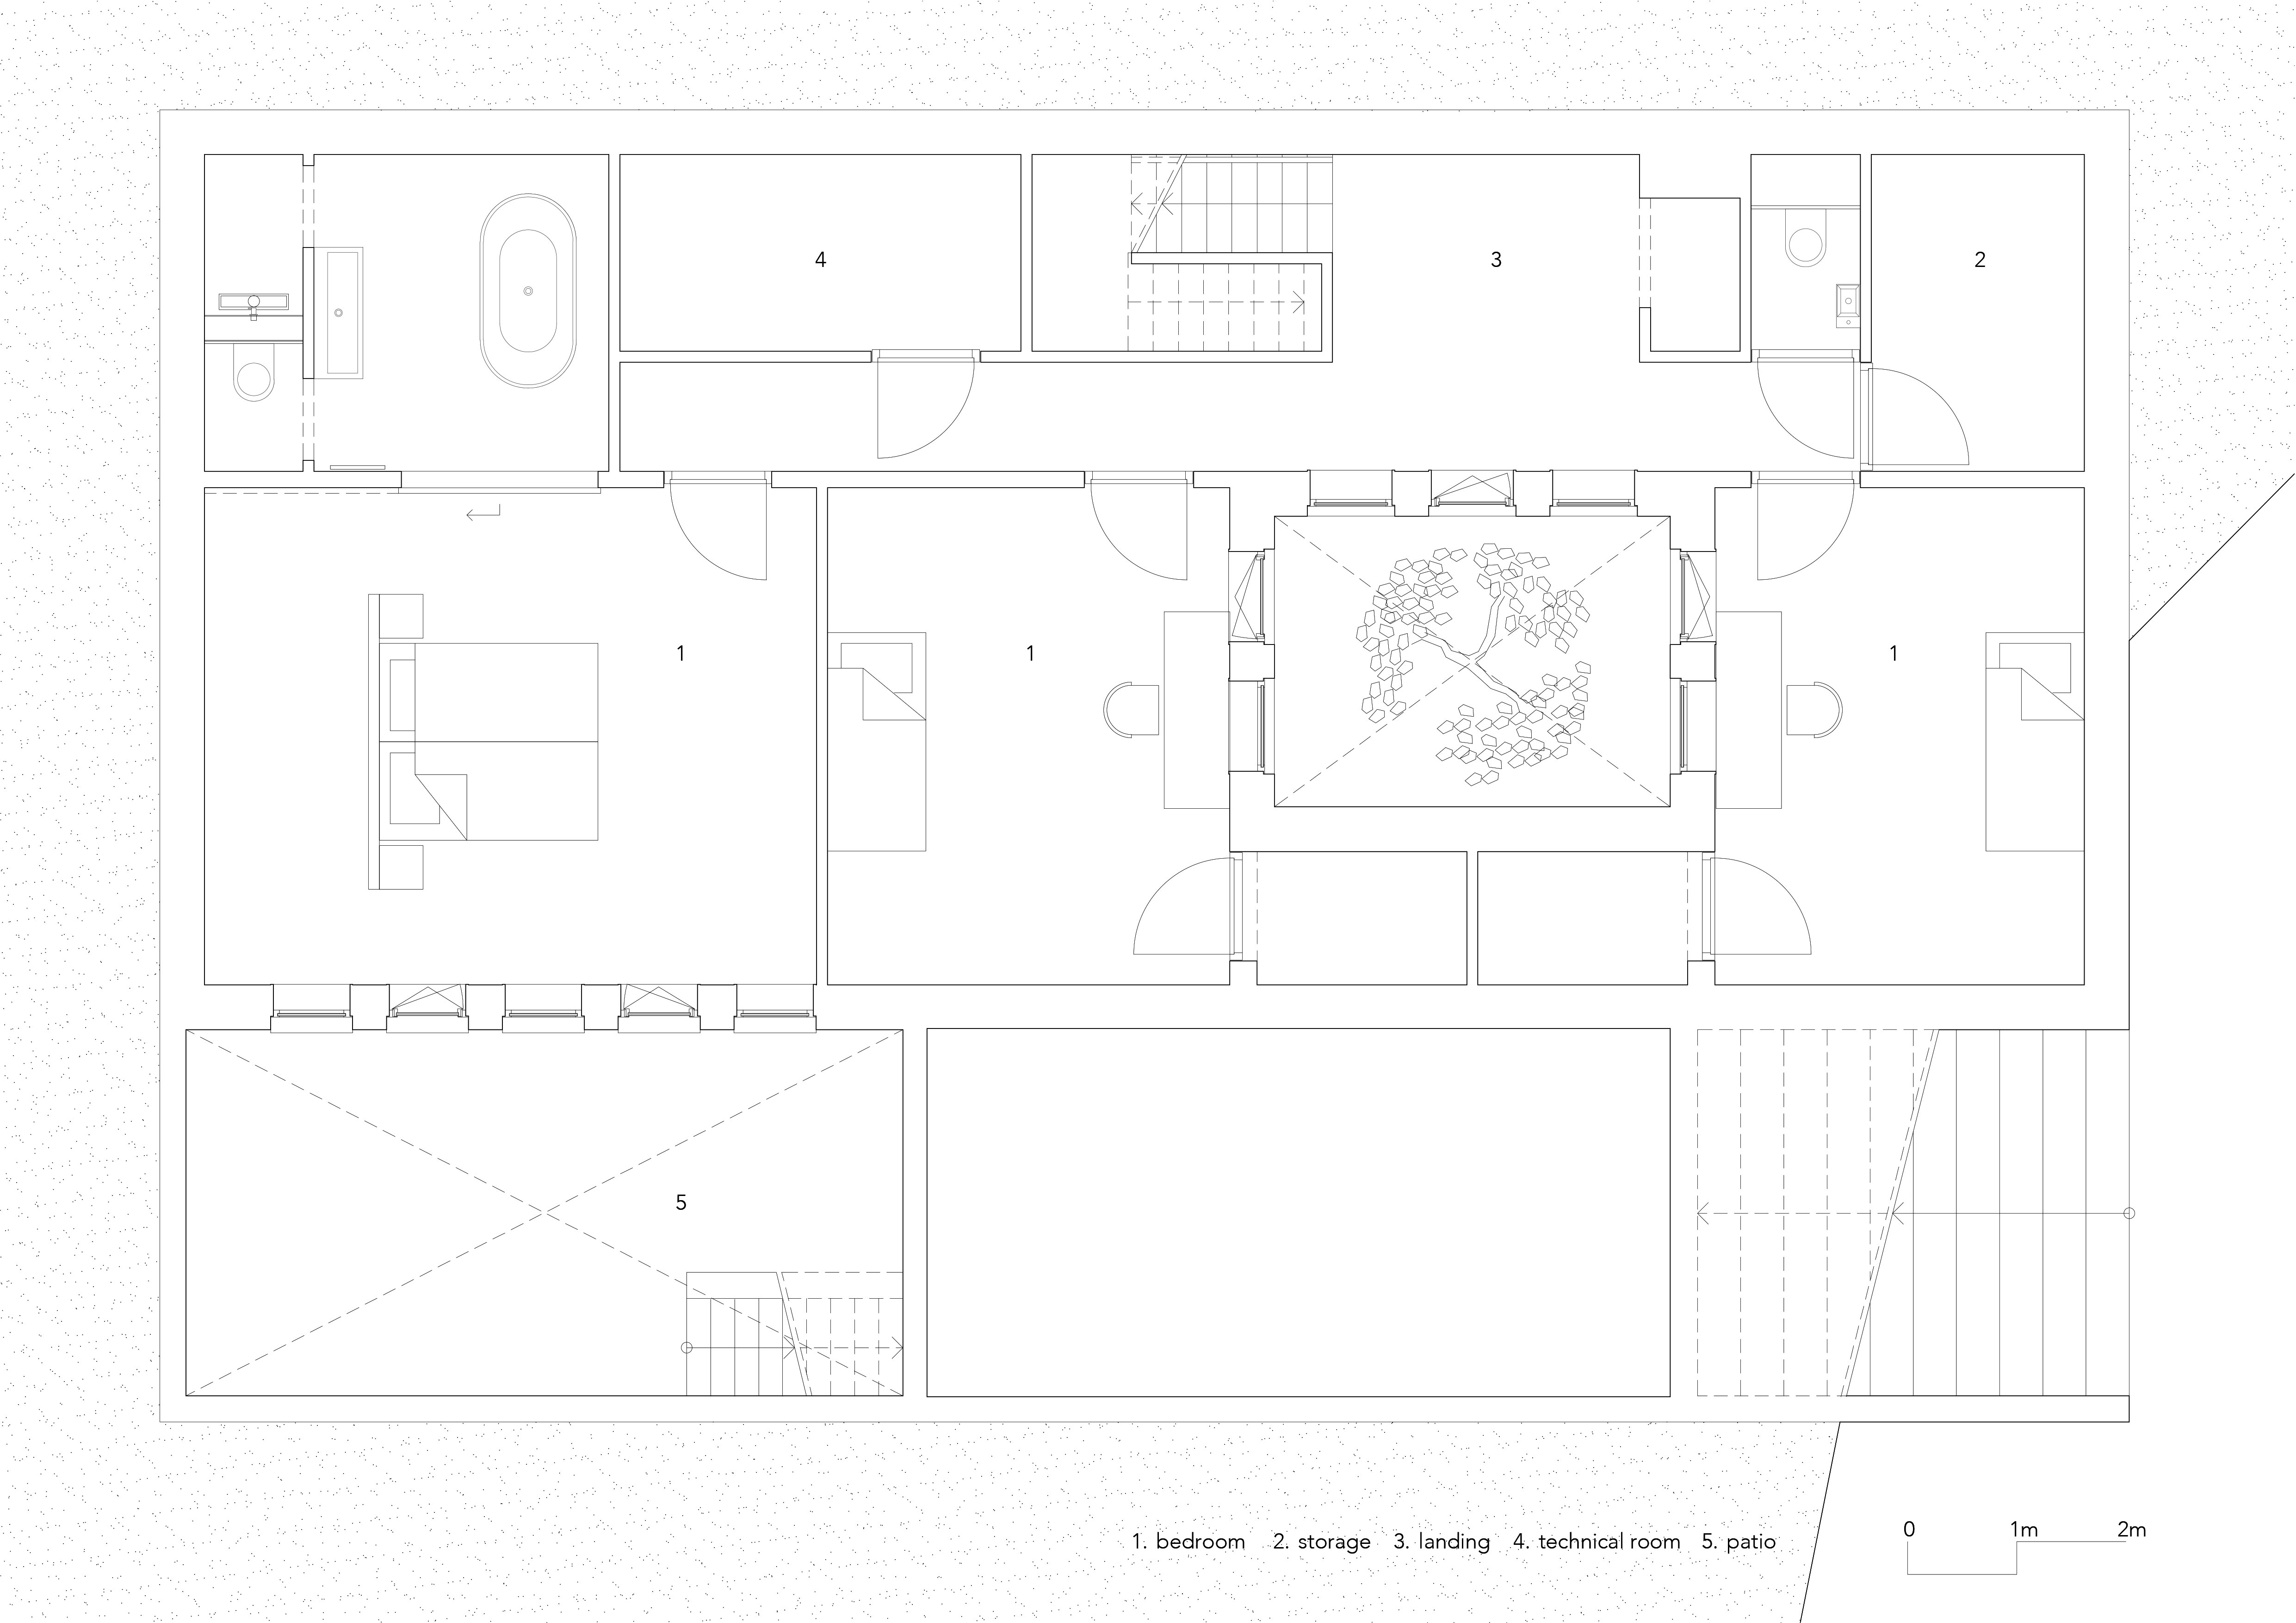 Terphouse Rotterdam studio AAAN House Design Polder Landscape Architecture Basement Plan